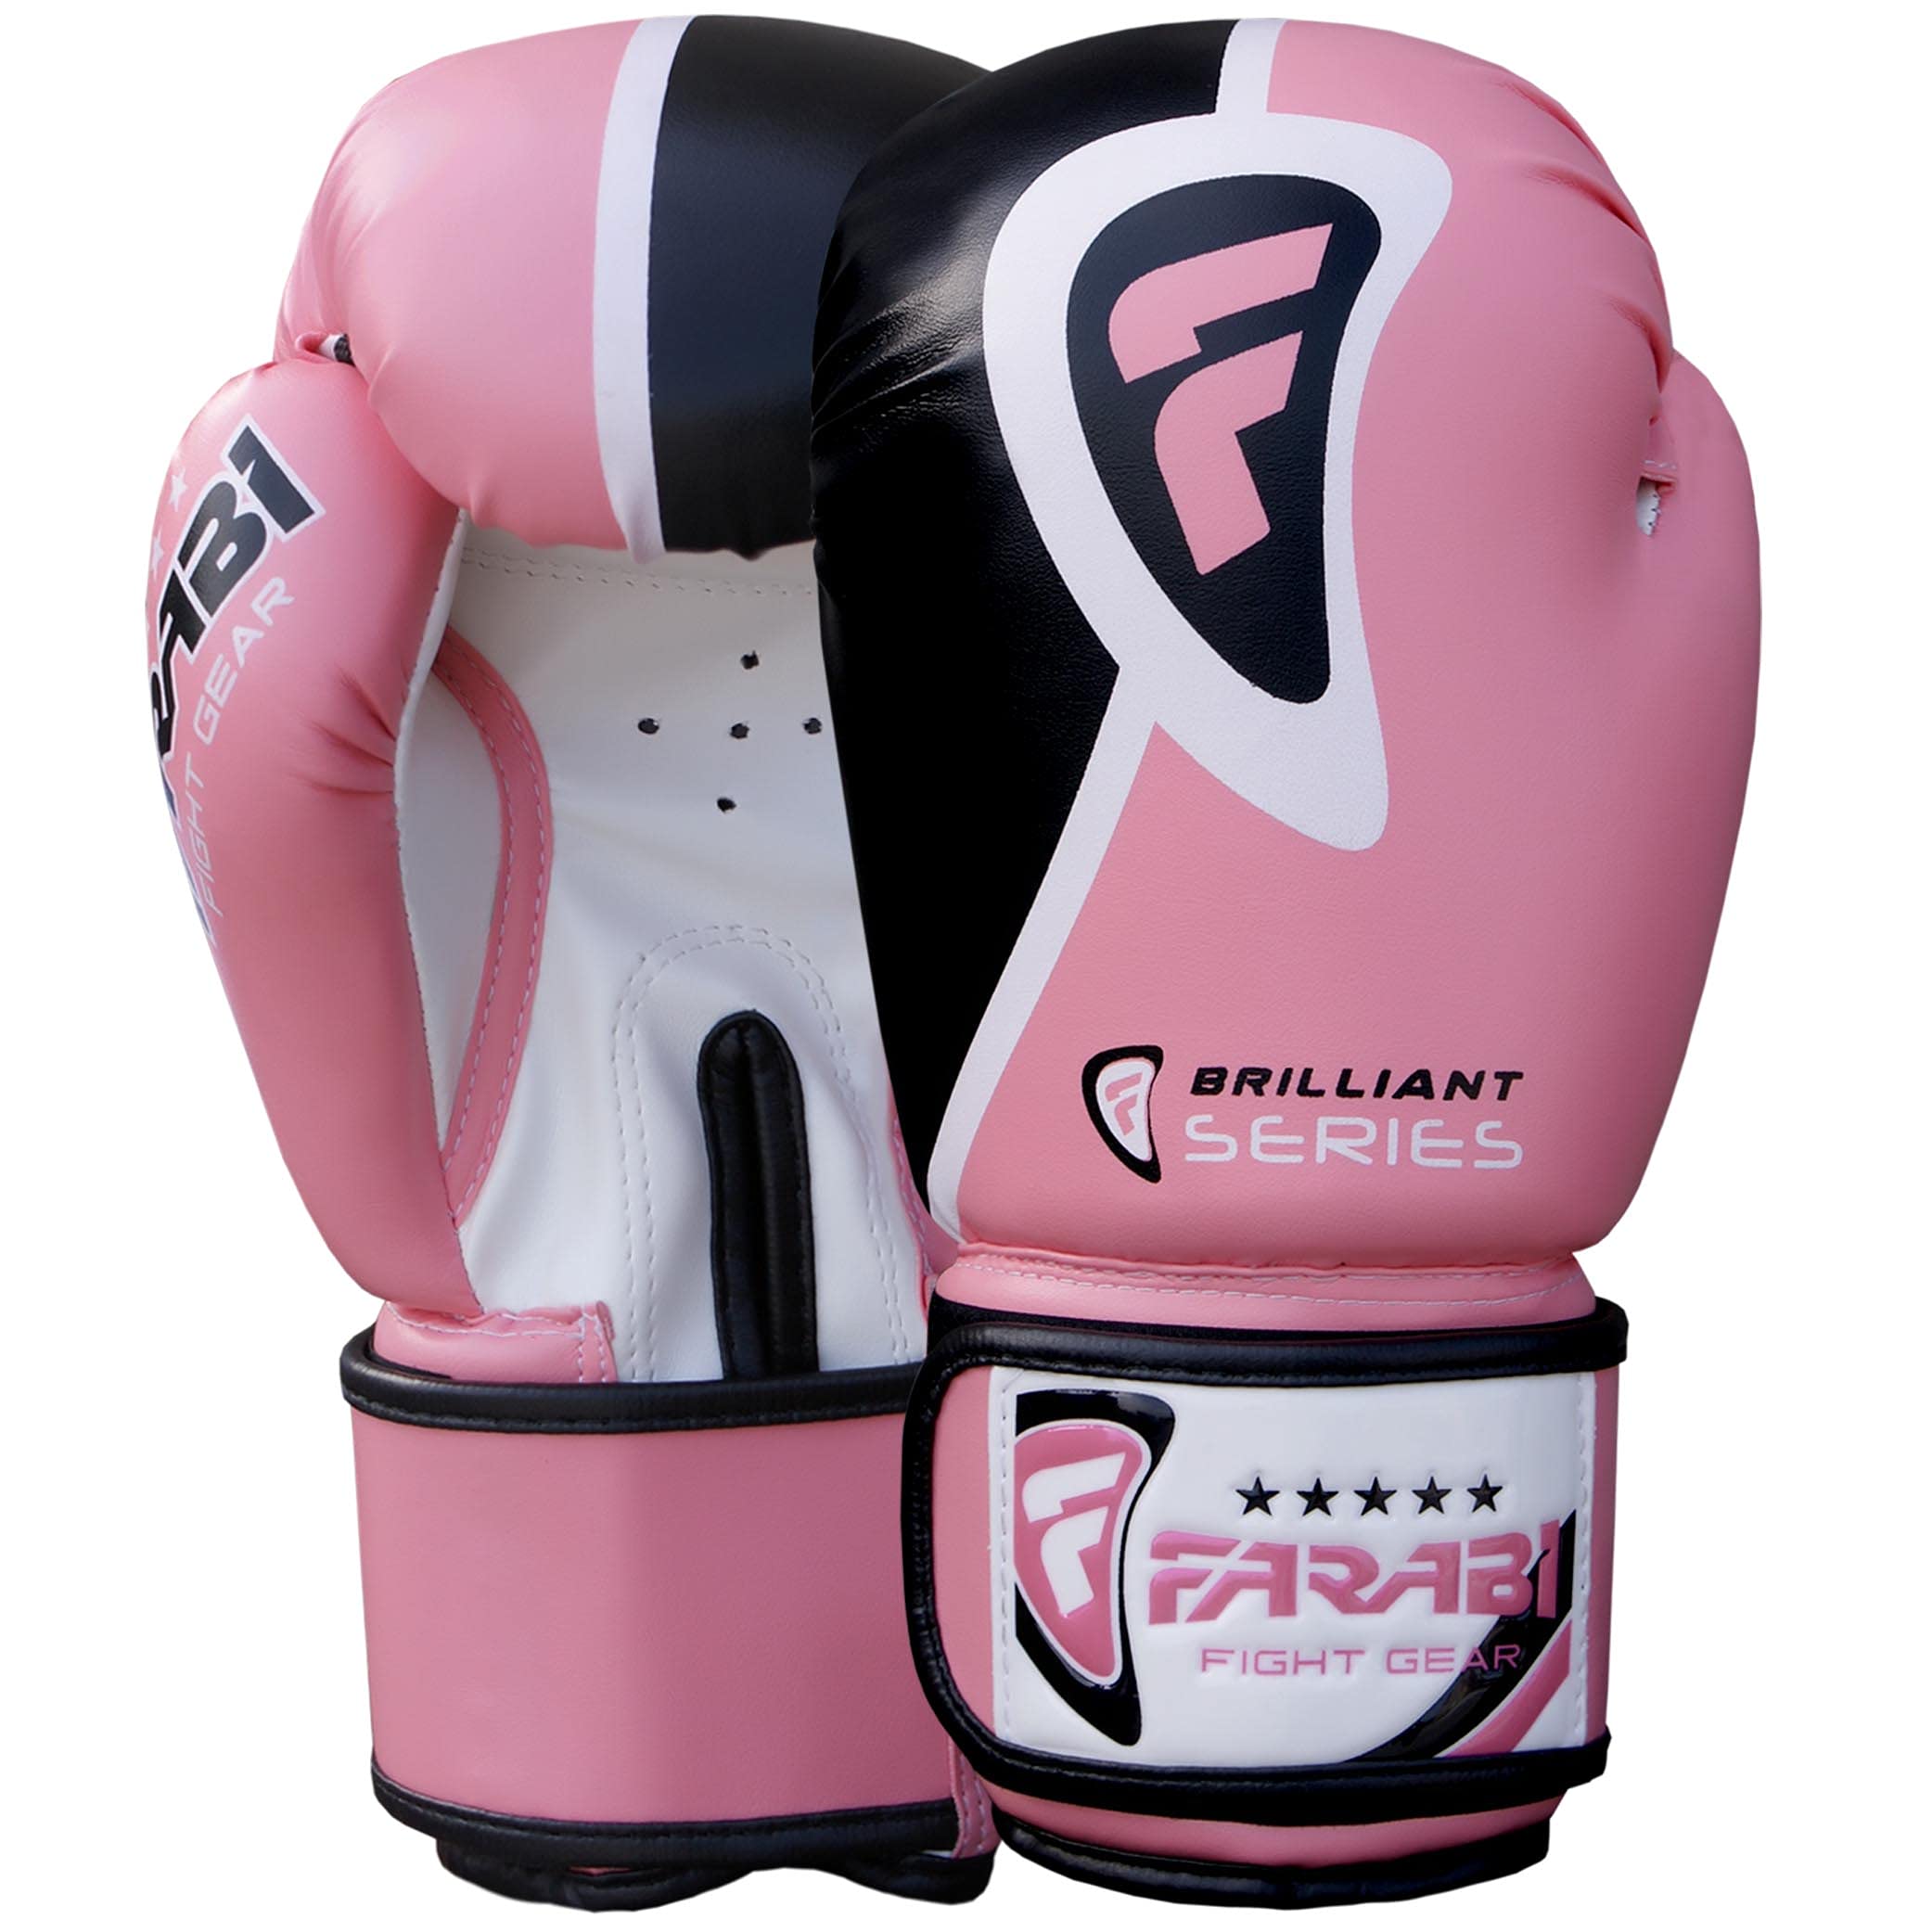 Farabi Sports Boxhandschuhe 10 oz, 12 oz, 14 oz, 16 oz Box Handschuhe für Training, Sparring, Kickboxen, MMA, Muay Thai, Boxhandschuhe männer & Damen Kampf Handschuhe (Pink Brilliant, 14-oz)